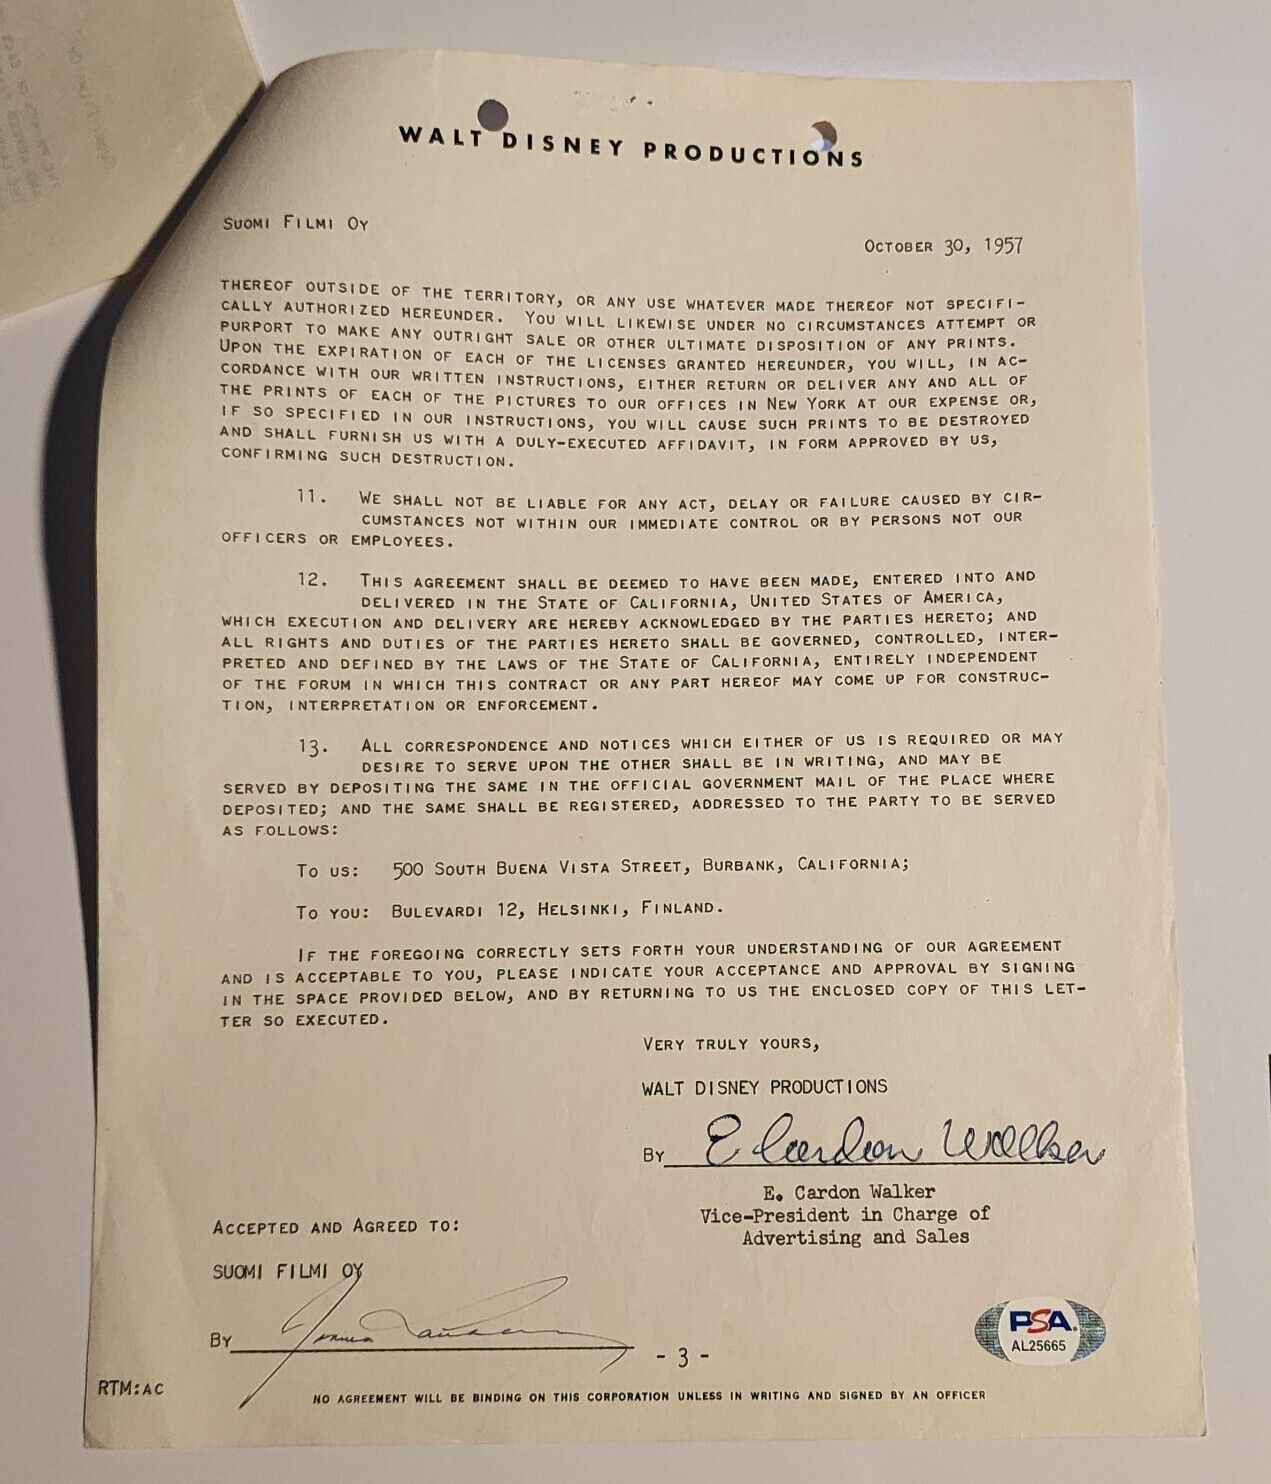 1957 Disney distribution contract signed by E Cardon Walker PSA DNA President 2 Без бренда - фотография #4